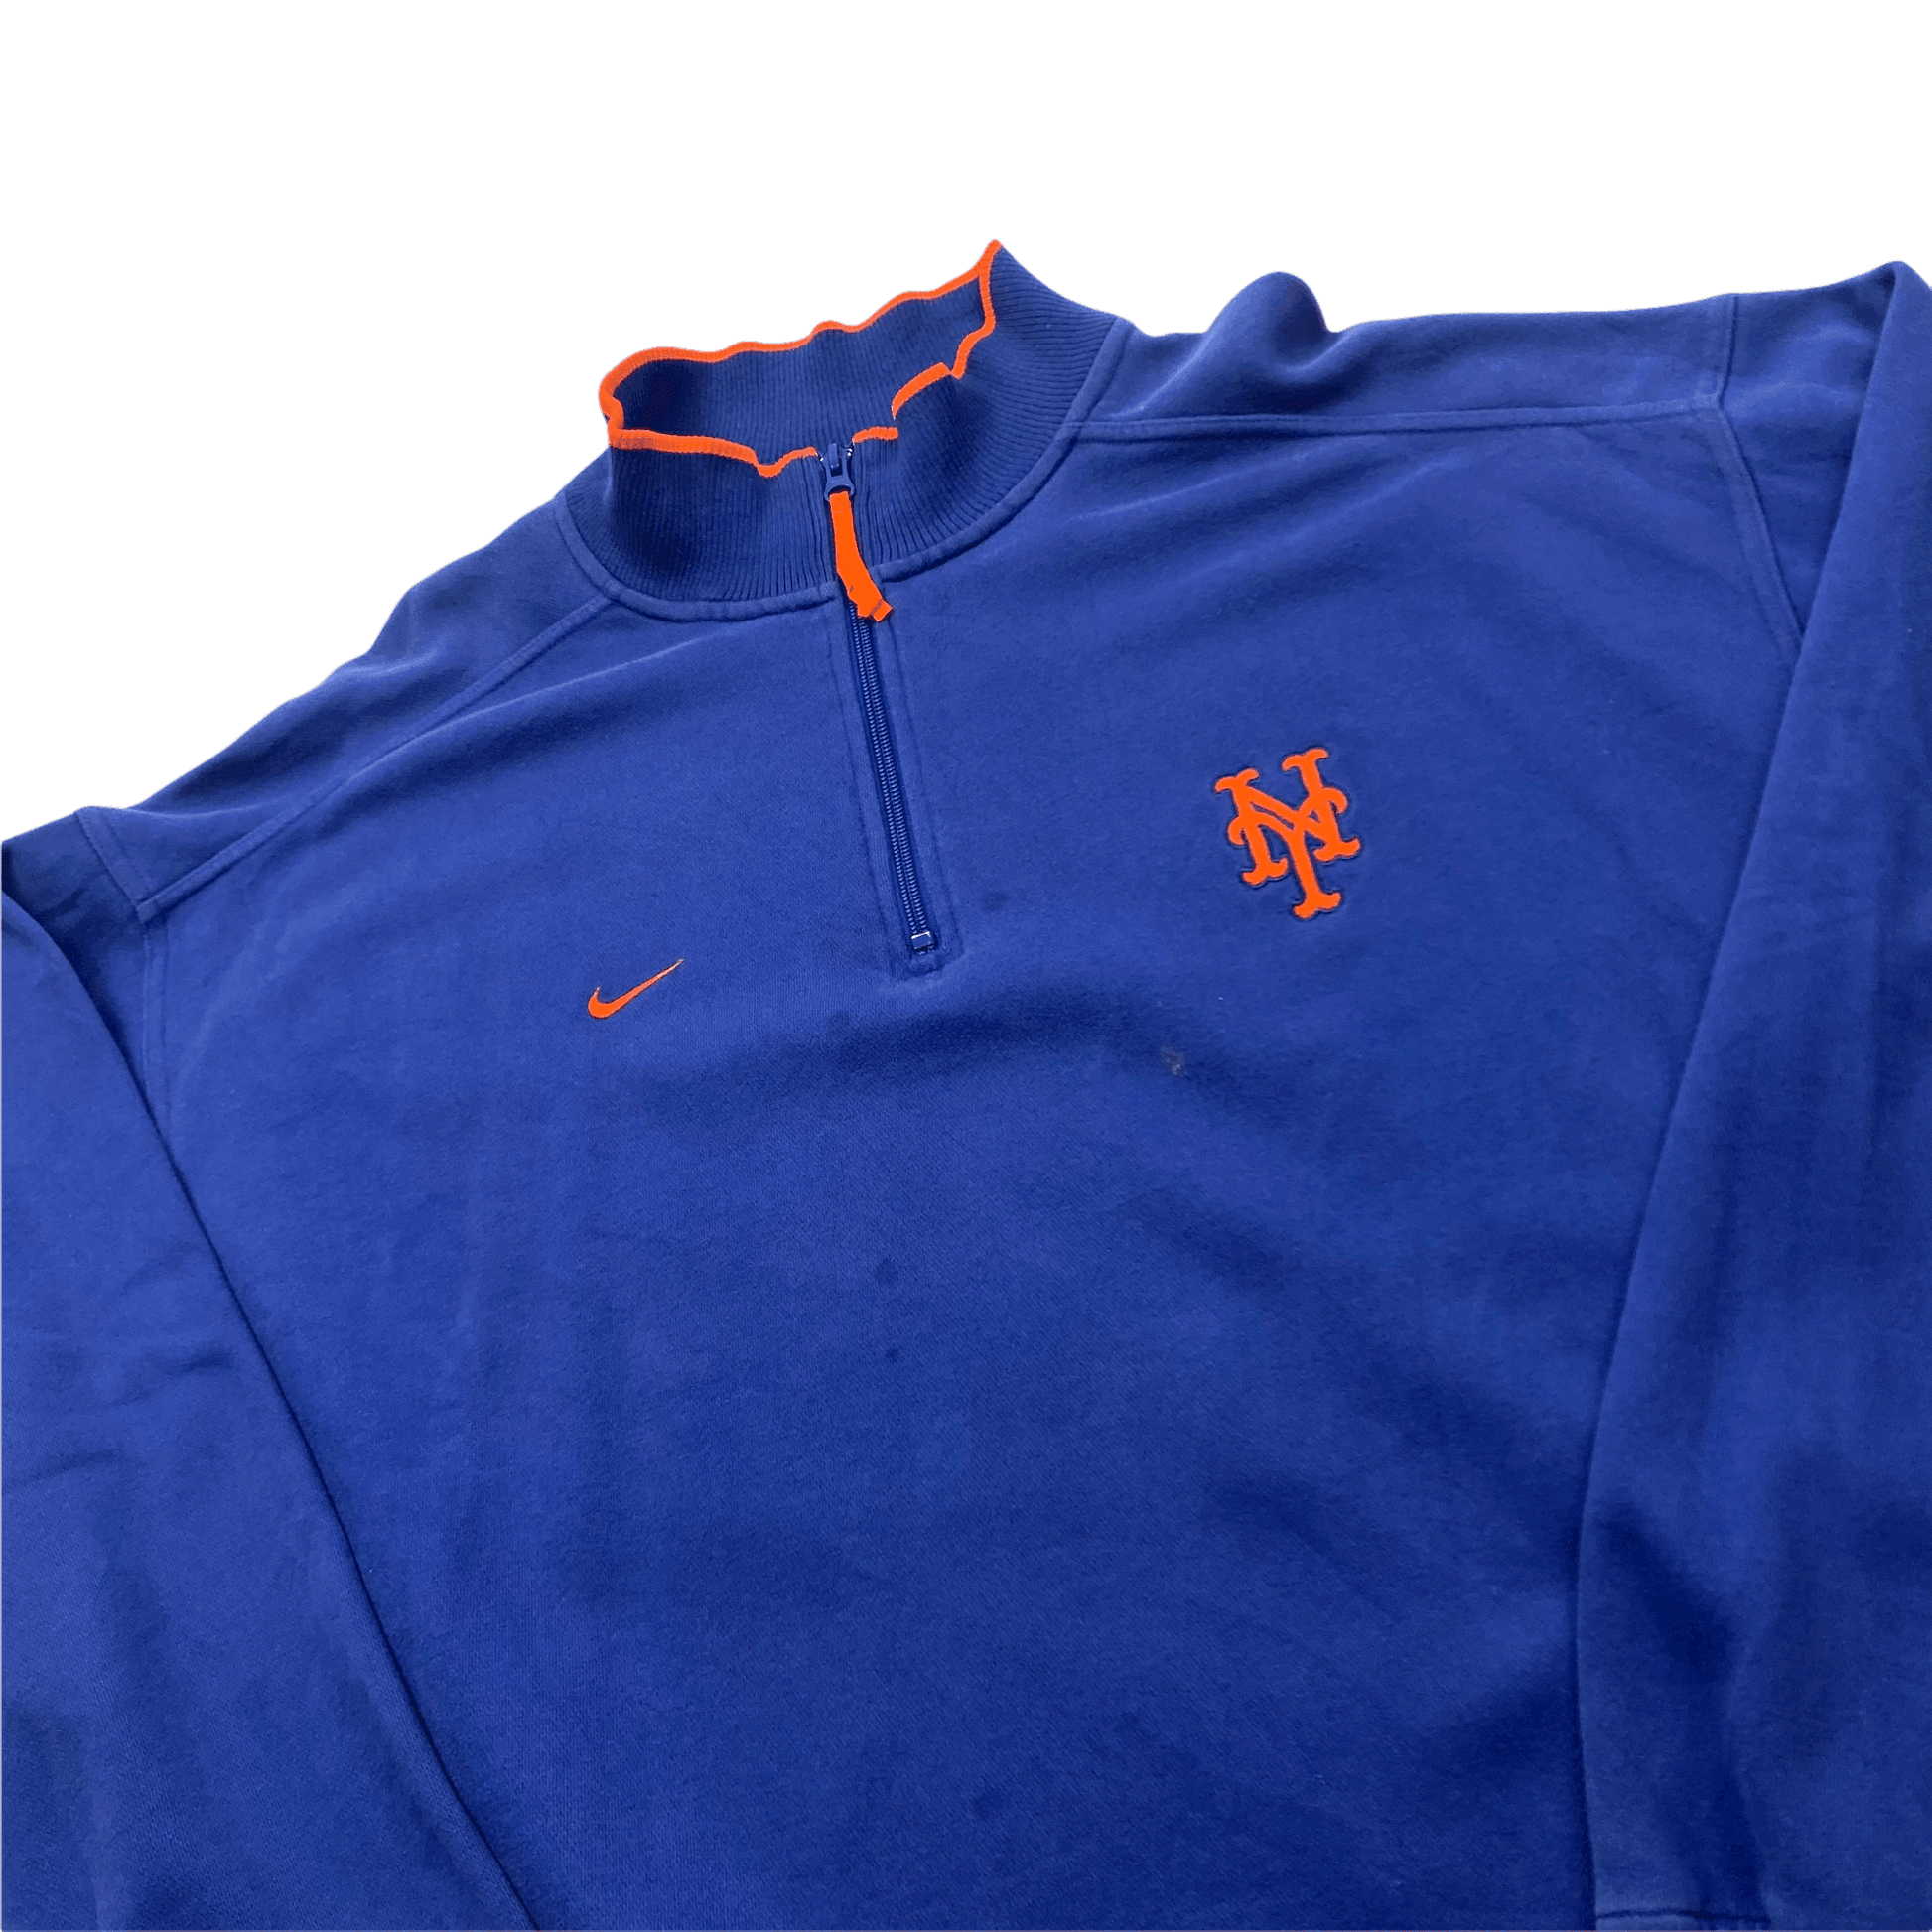 Vintage 90s Navy Blue + Orange Nike New York Giants NFL Quarter Zip Sweatshirt - Extra Large - The Streetwear Studio